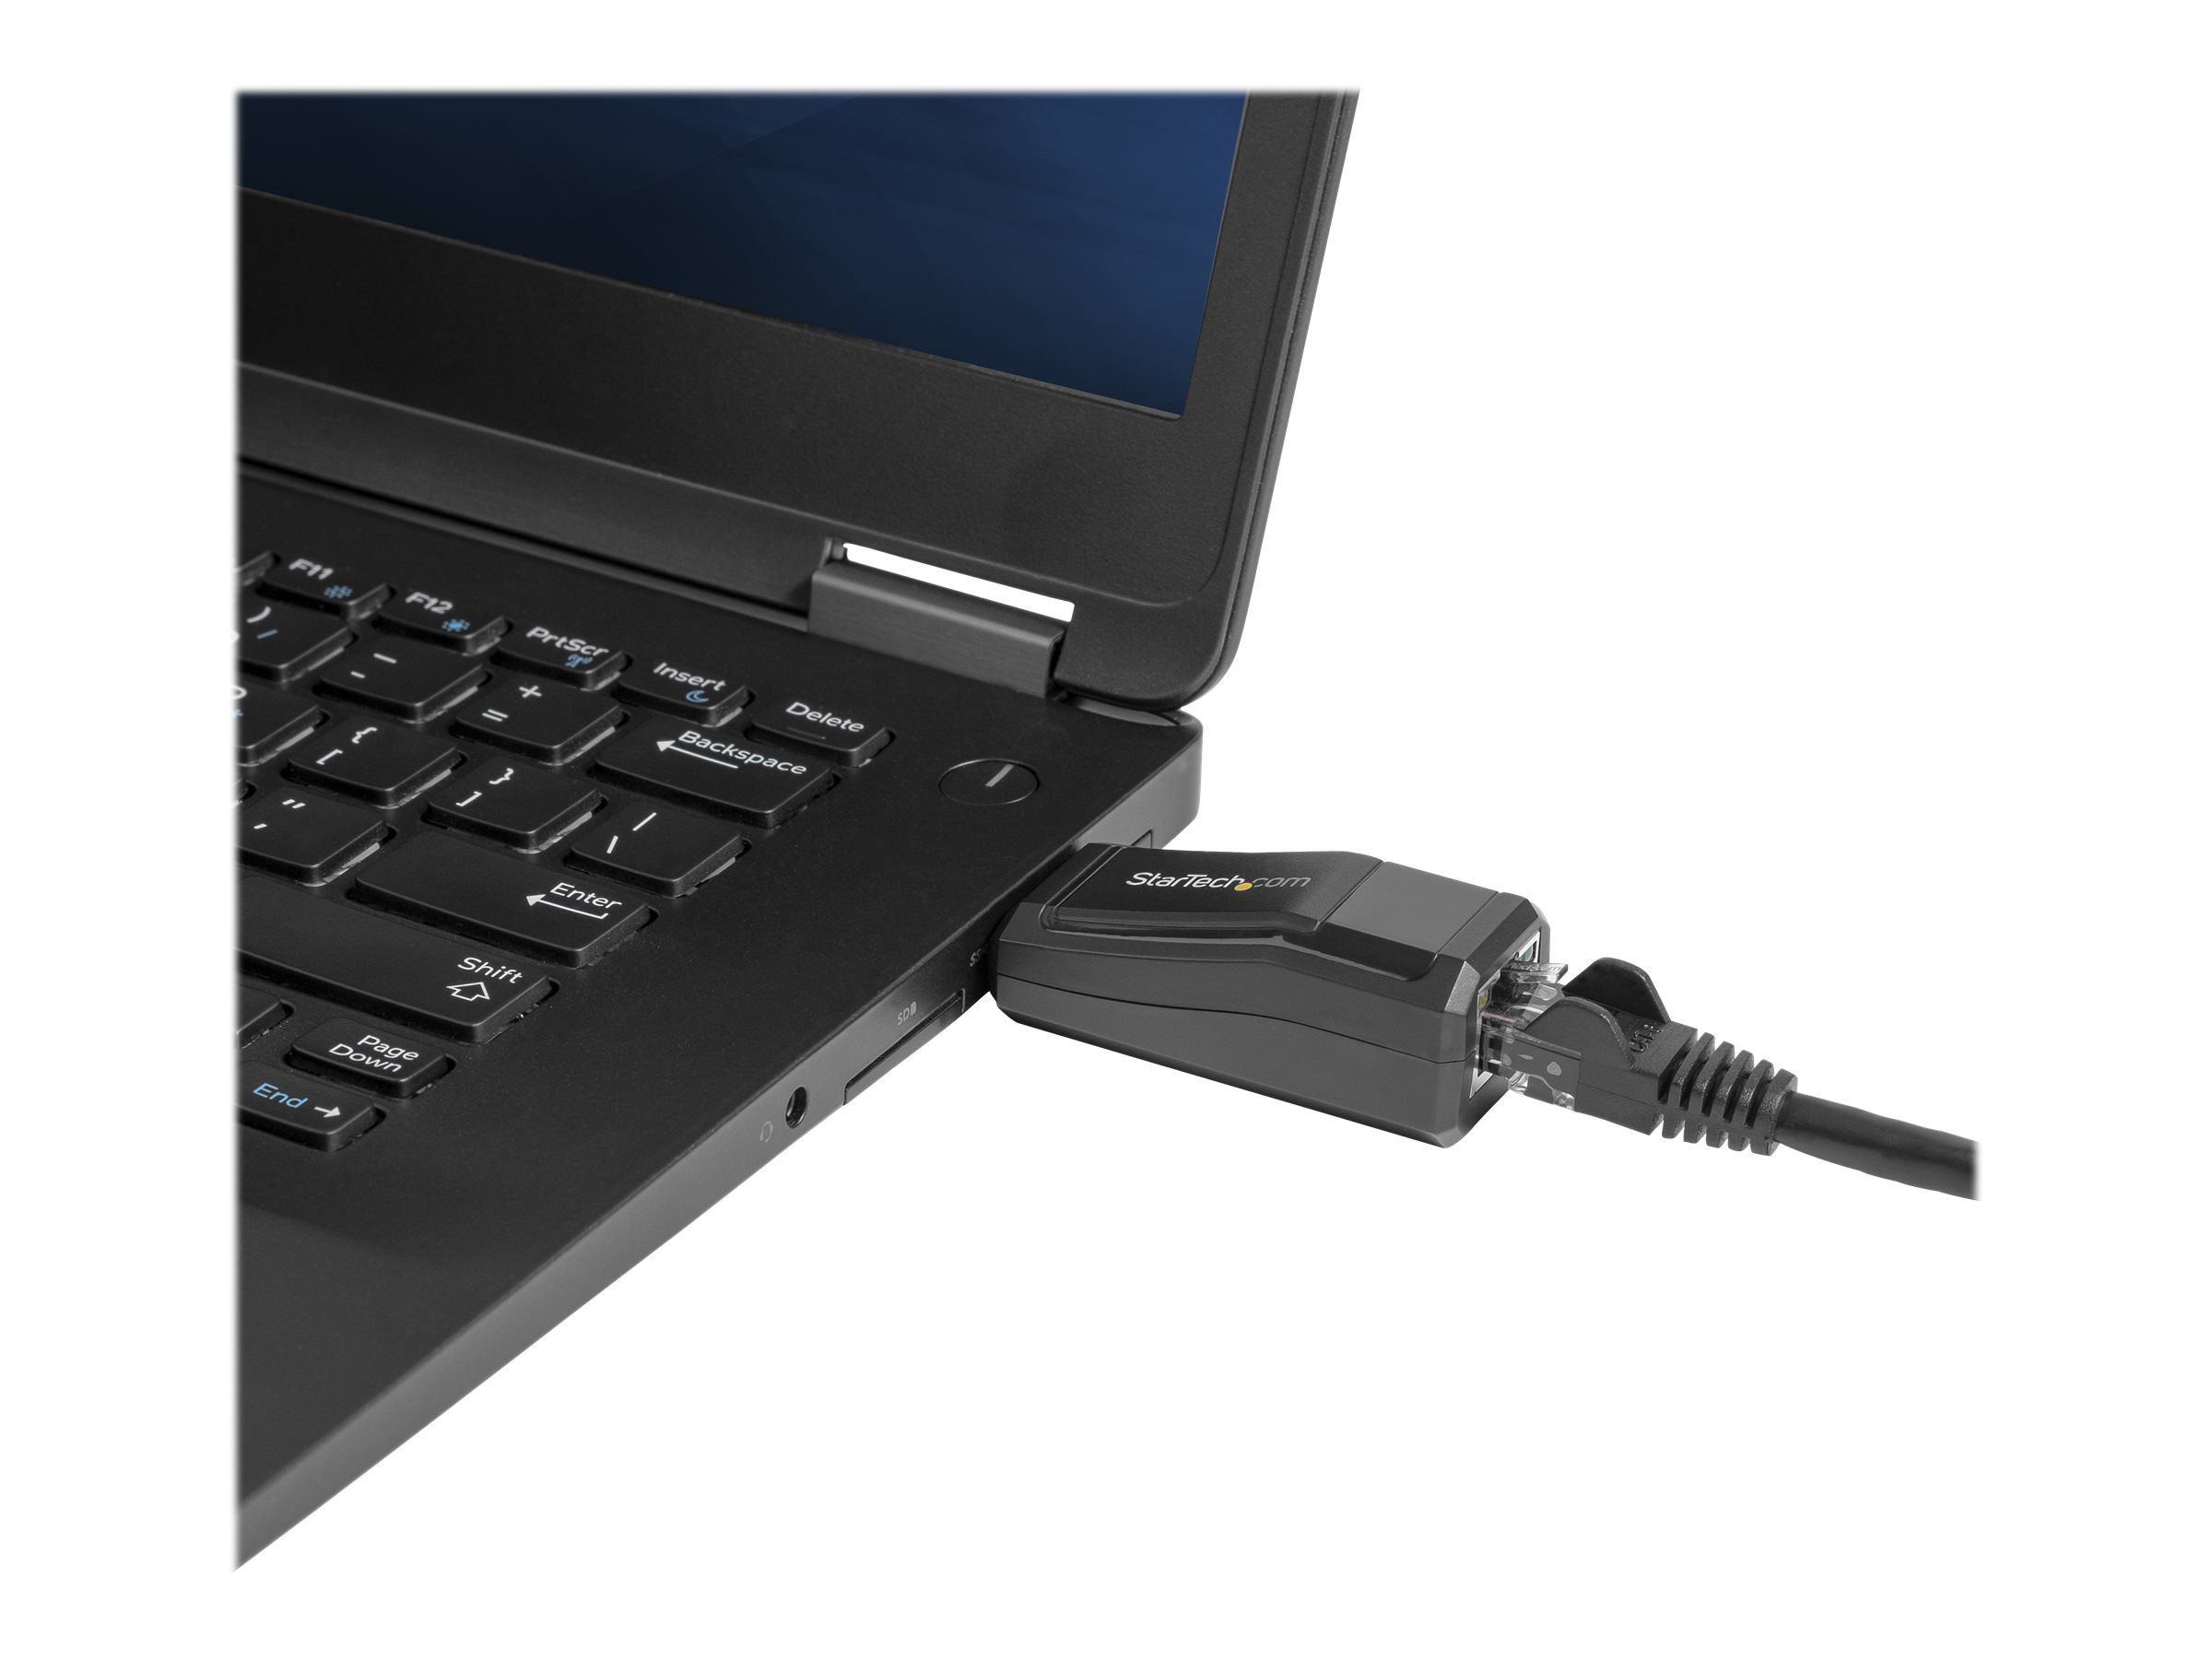 USB 3.0 to Gigabit Network Adapter, Silver, Sleek Aluminum Design for  MacBook, Chromebook or Tablet, Native Driver Support